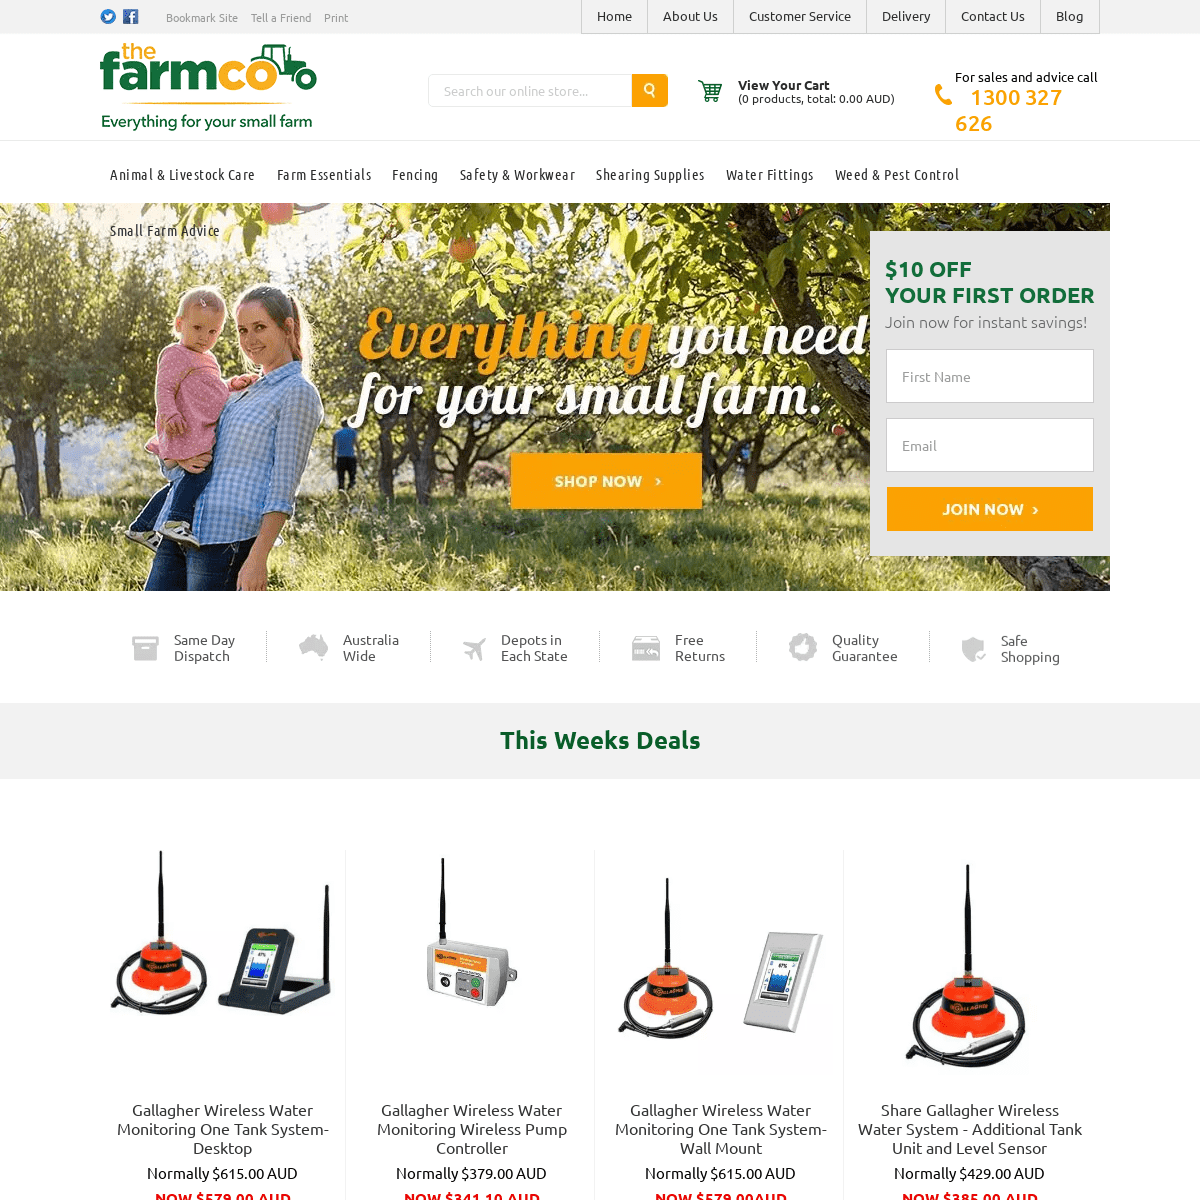 A complete backup of farmco.com.au